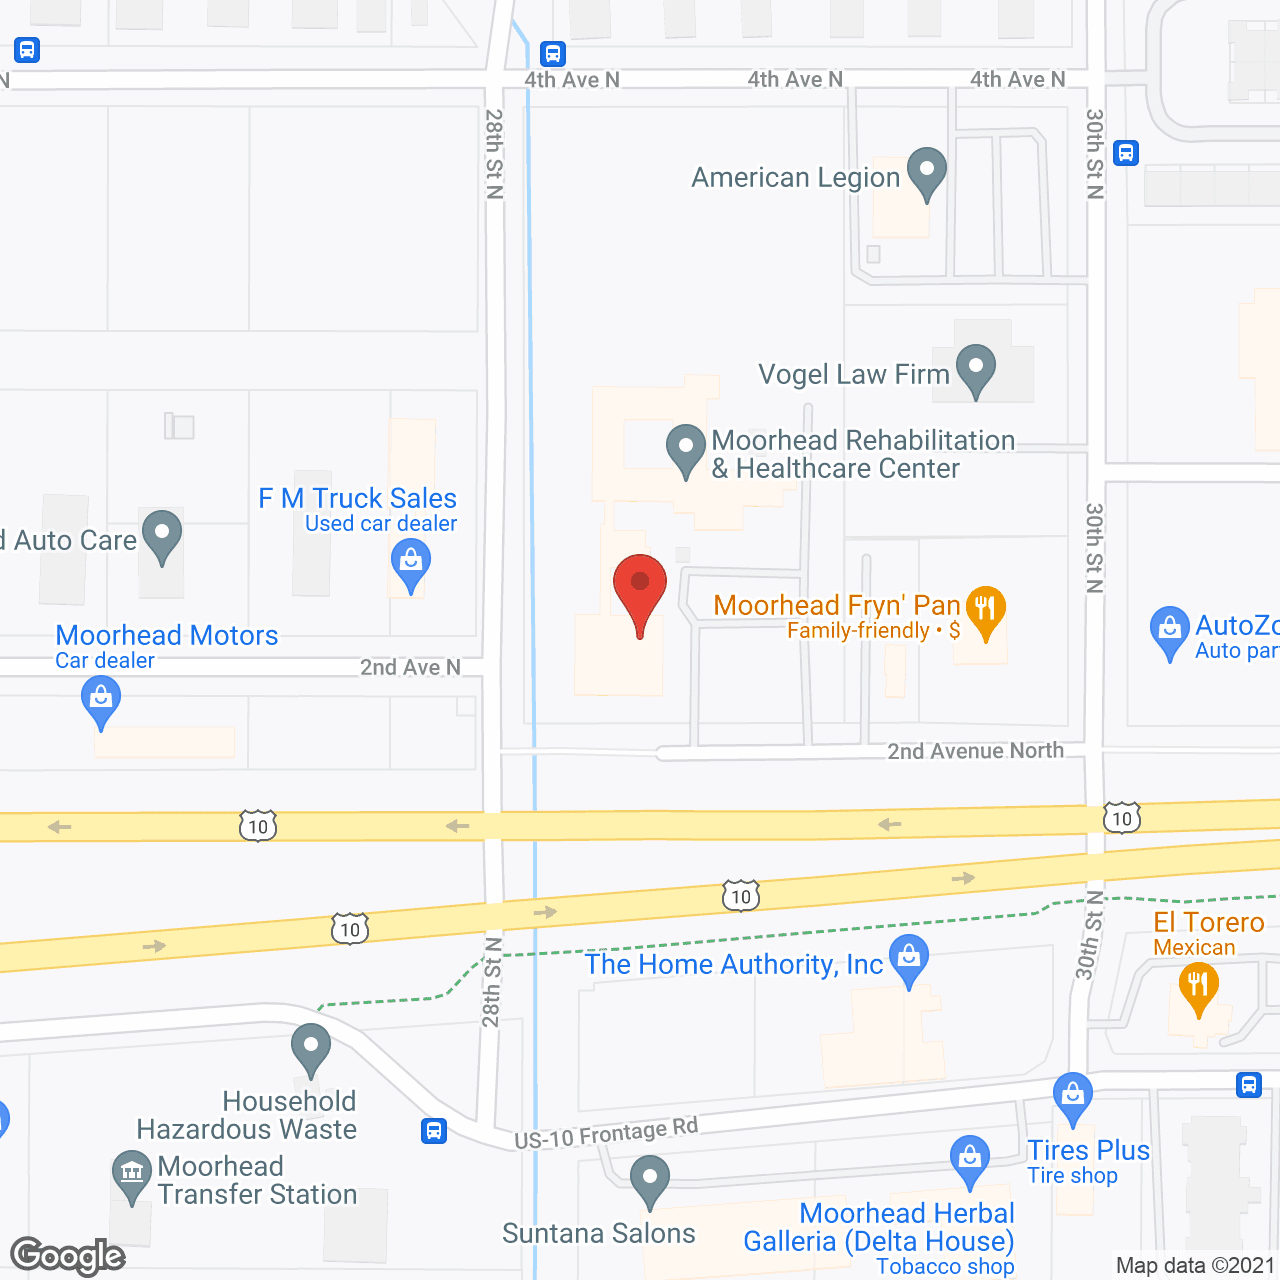 Golden LivingCenter - Moorhead in google map